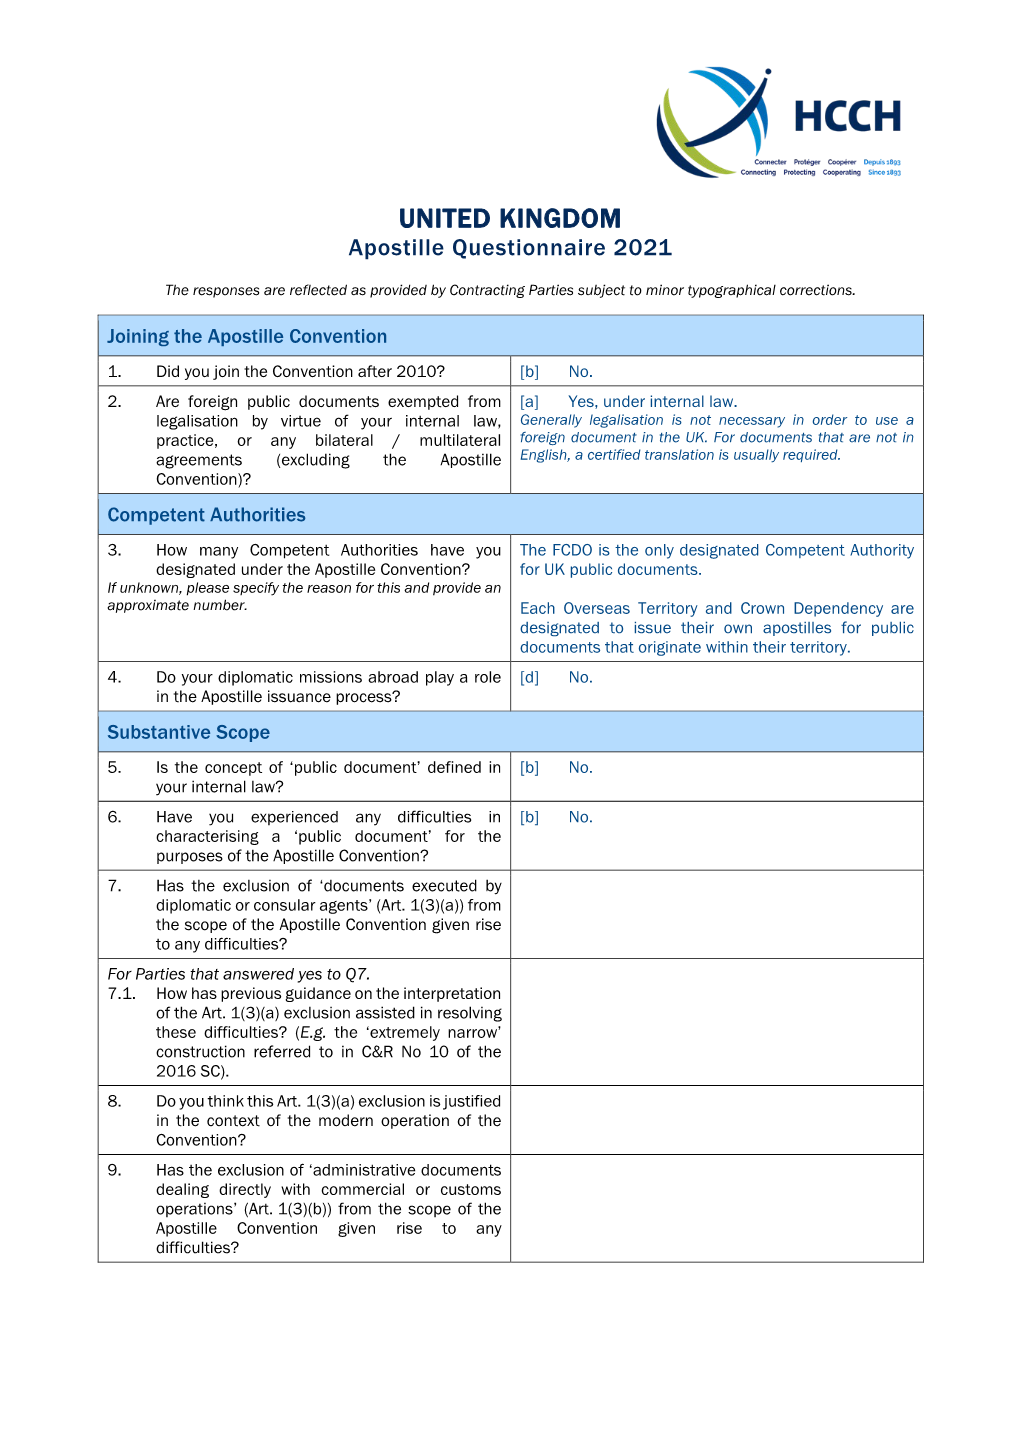 UNITED KINGDOM Apostille Questionnaire 2021